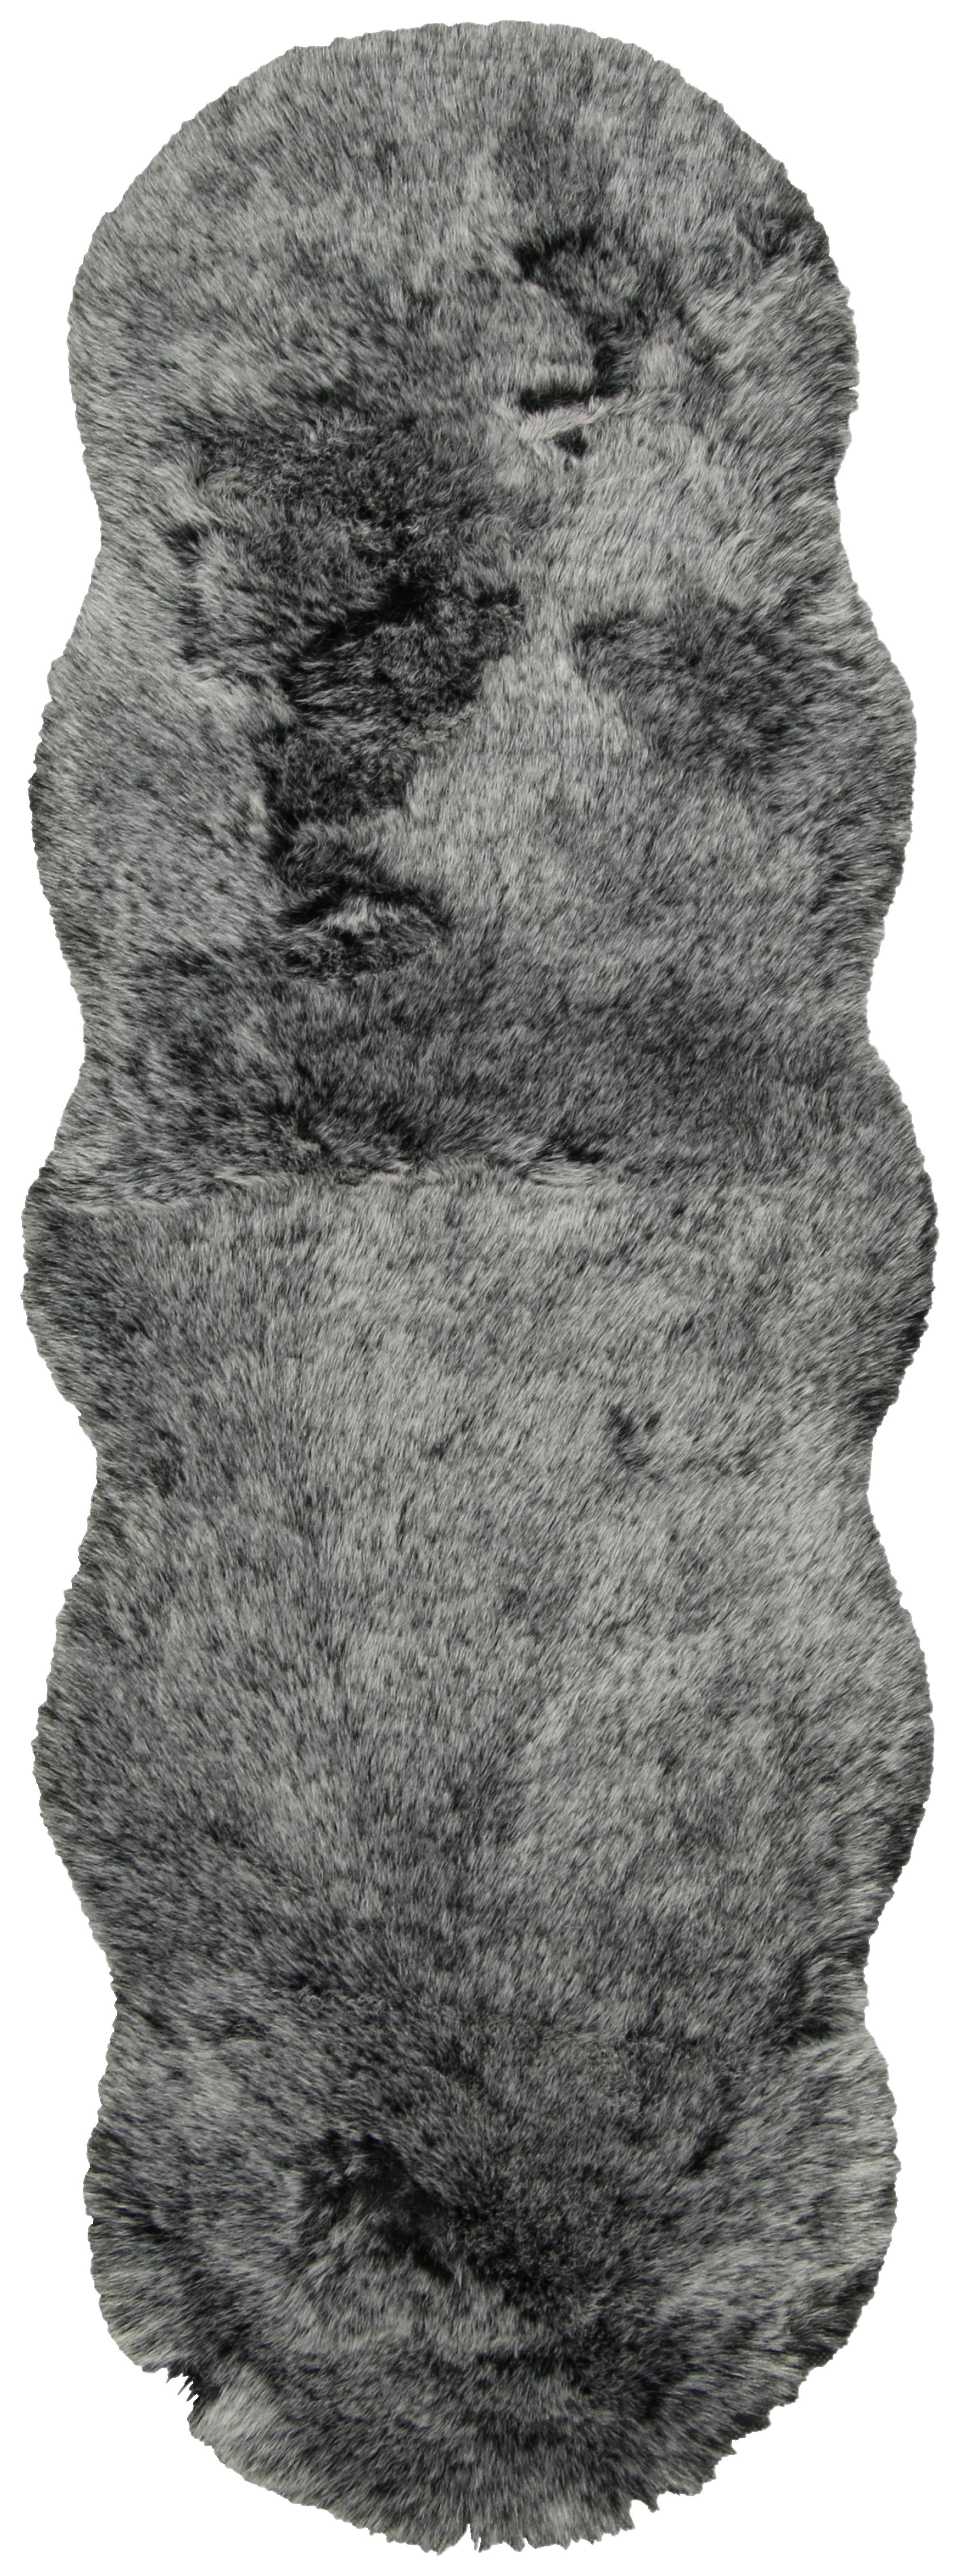 Kunstfell Chrisi 2 in Grau ca. 55x160cm - Grau, Textil/Fell (55/160cm) - Modern Living